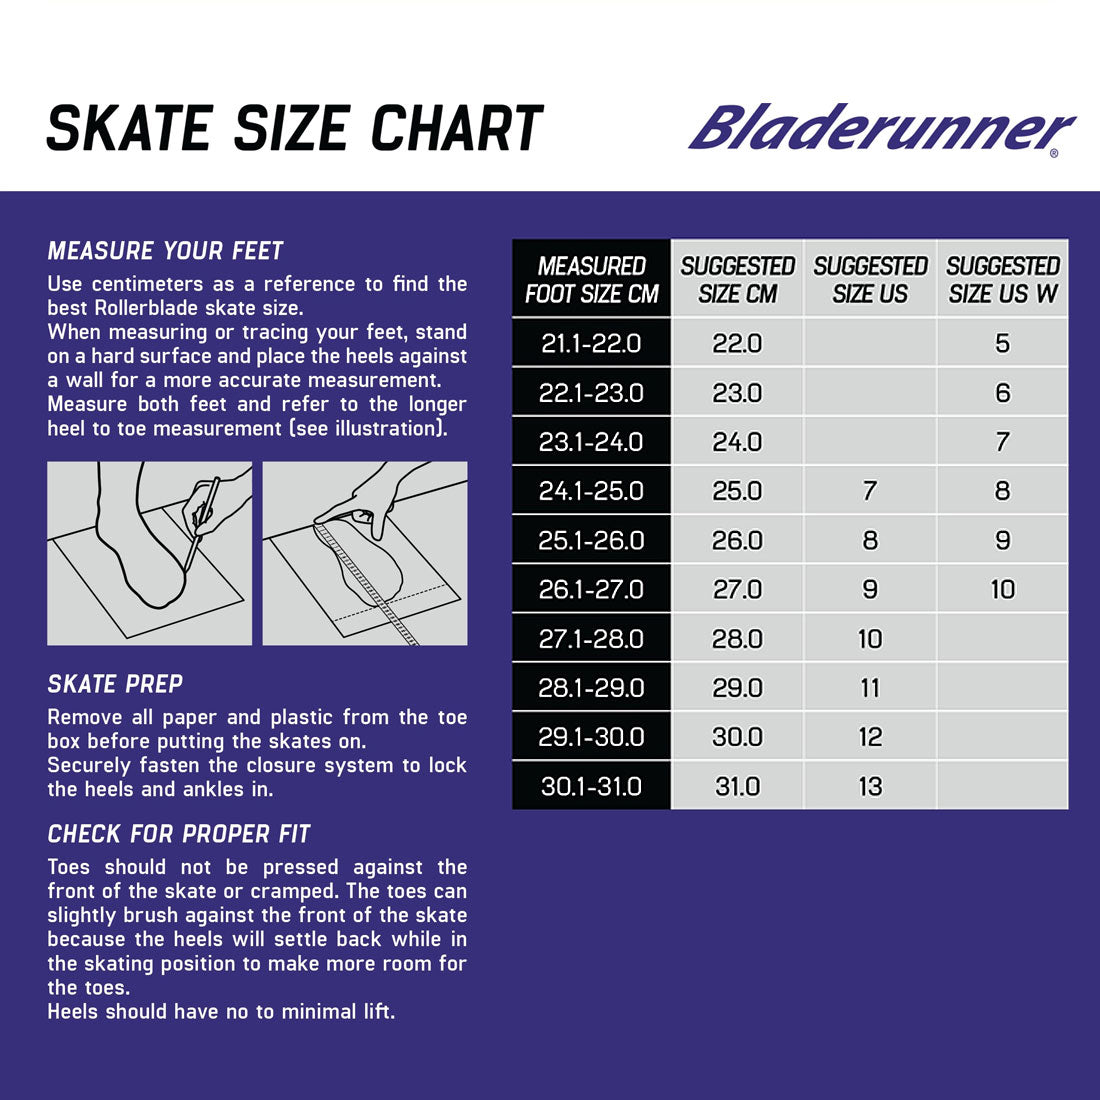 Bladerunner Advantage Pro XT - Black/Red Inline Rec Skates